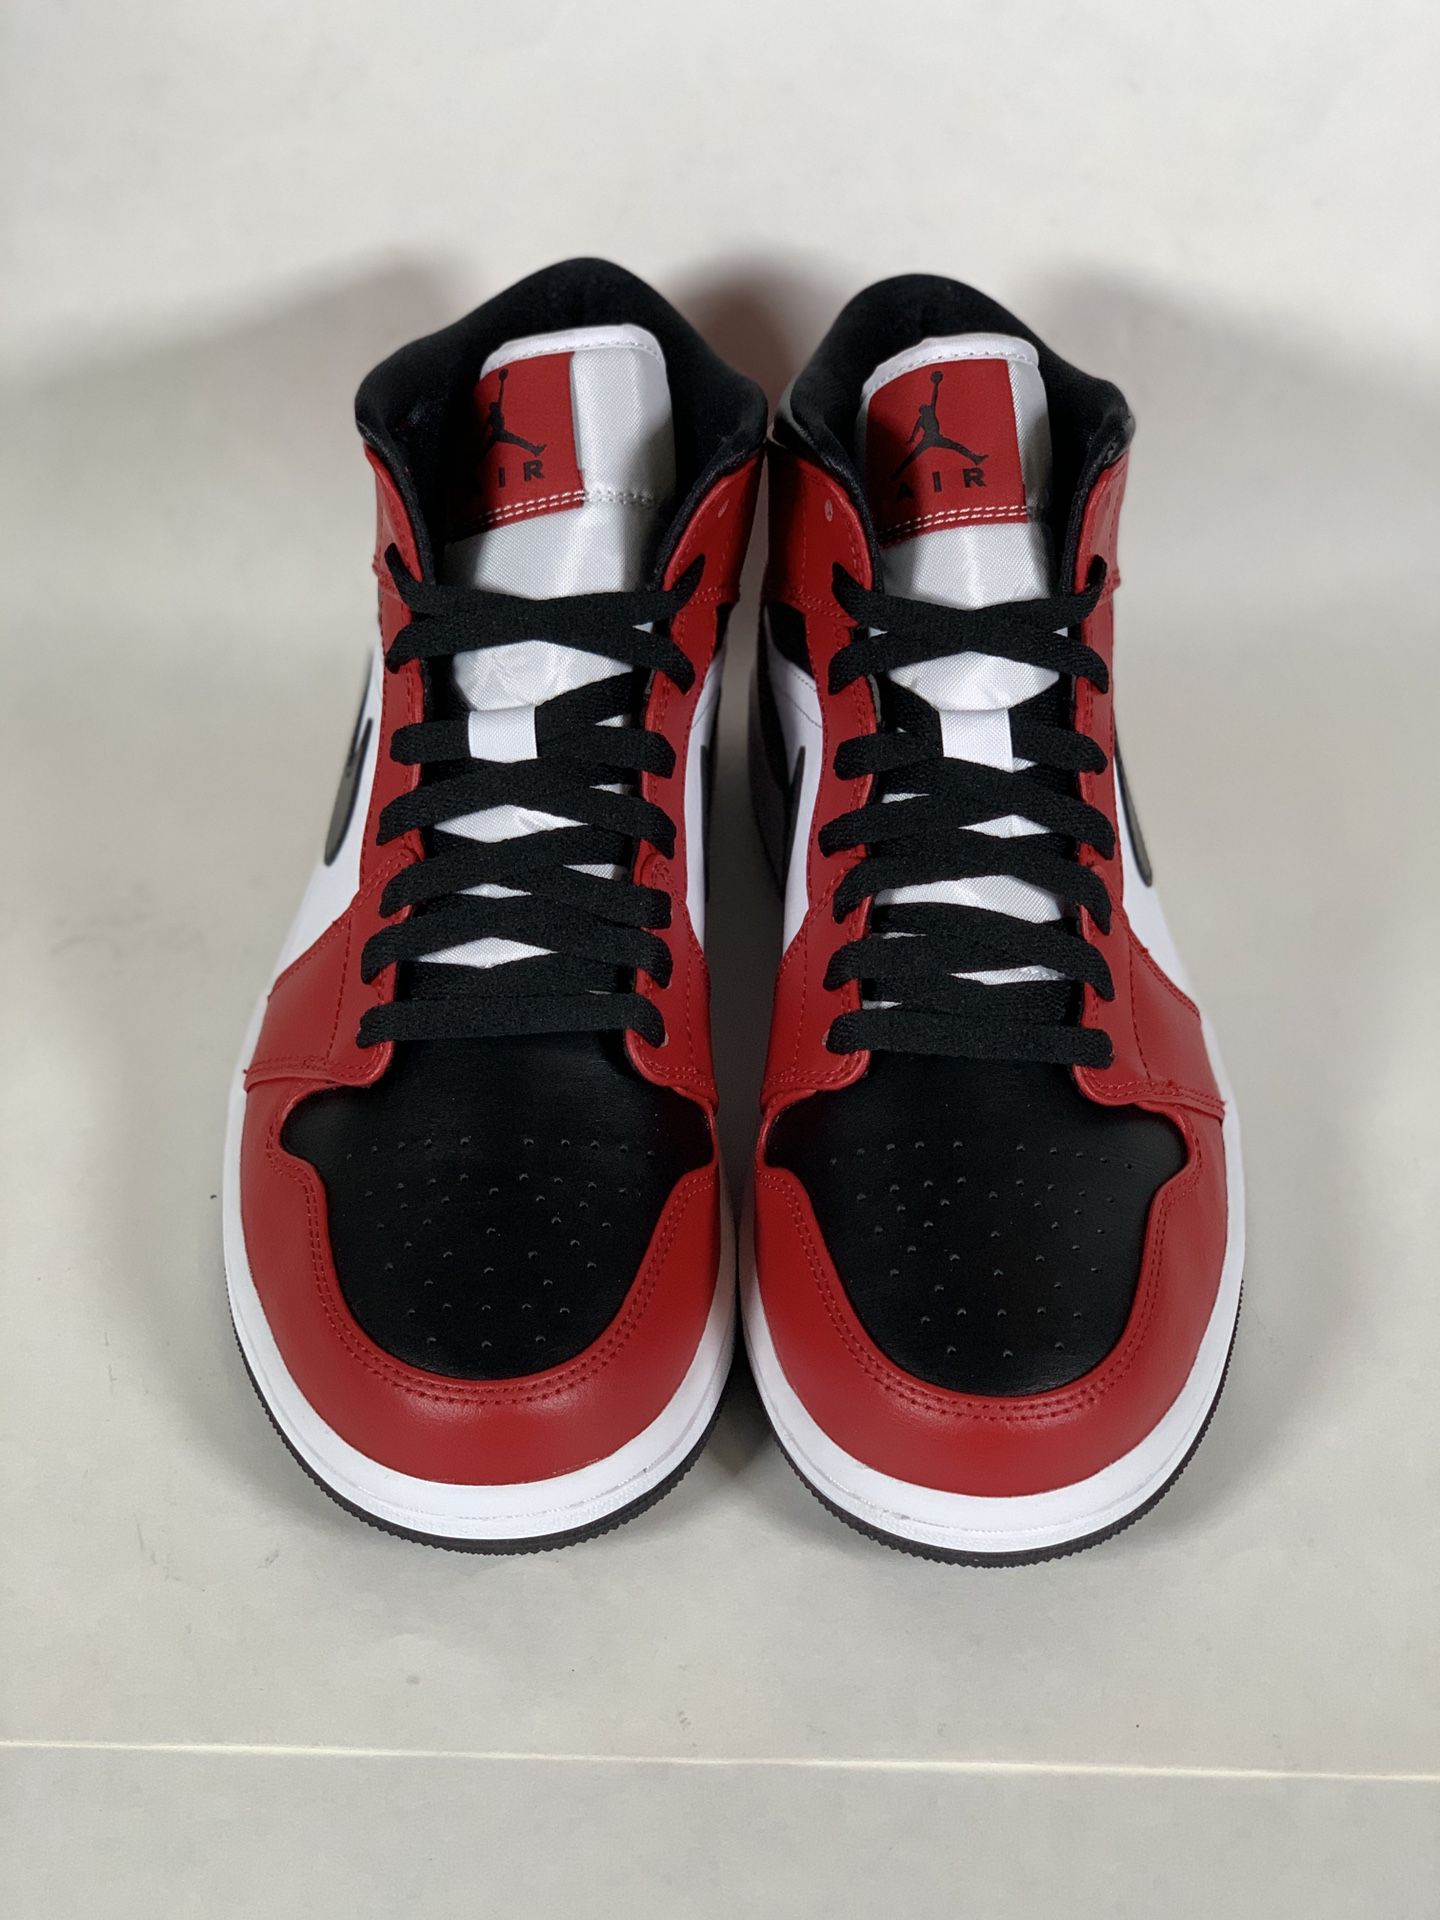 Jordan 1 Chicago Black Toe Nike Air Mid